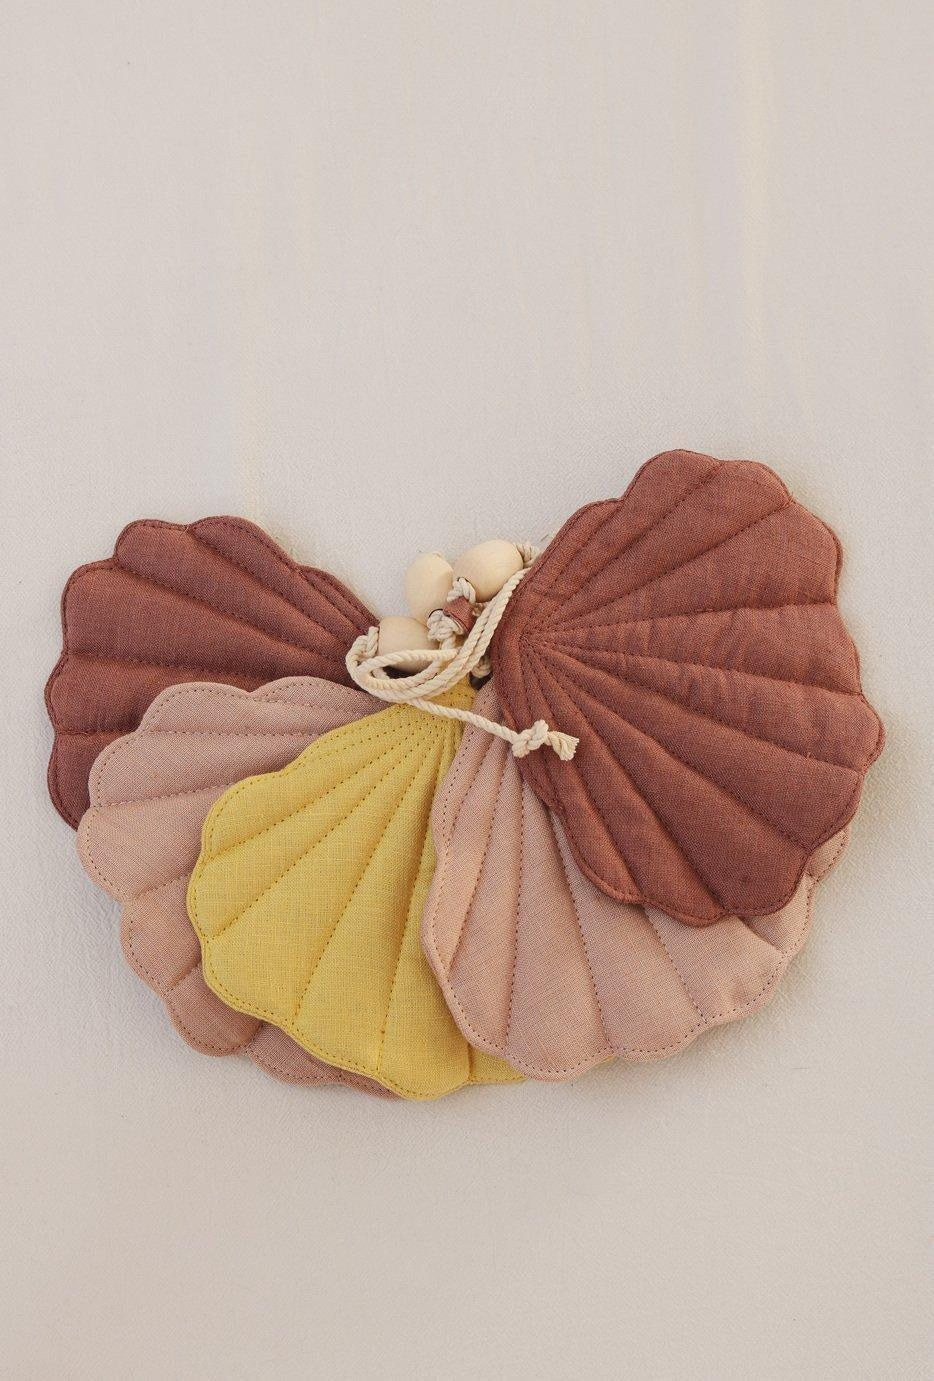 “Marsala” Linen Garland with Shells